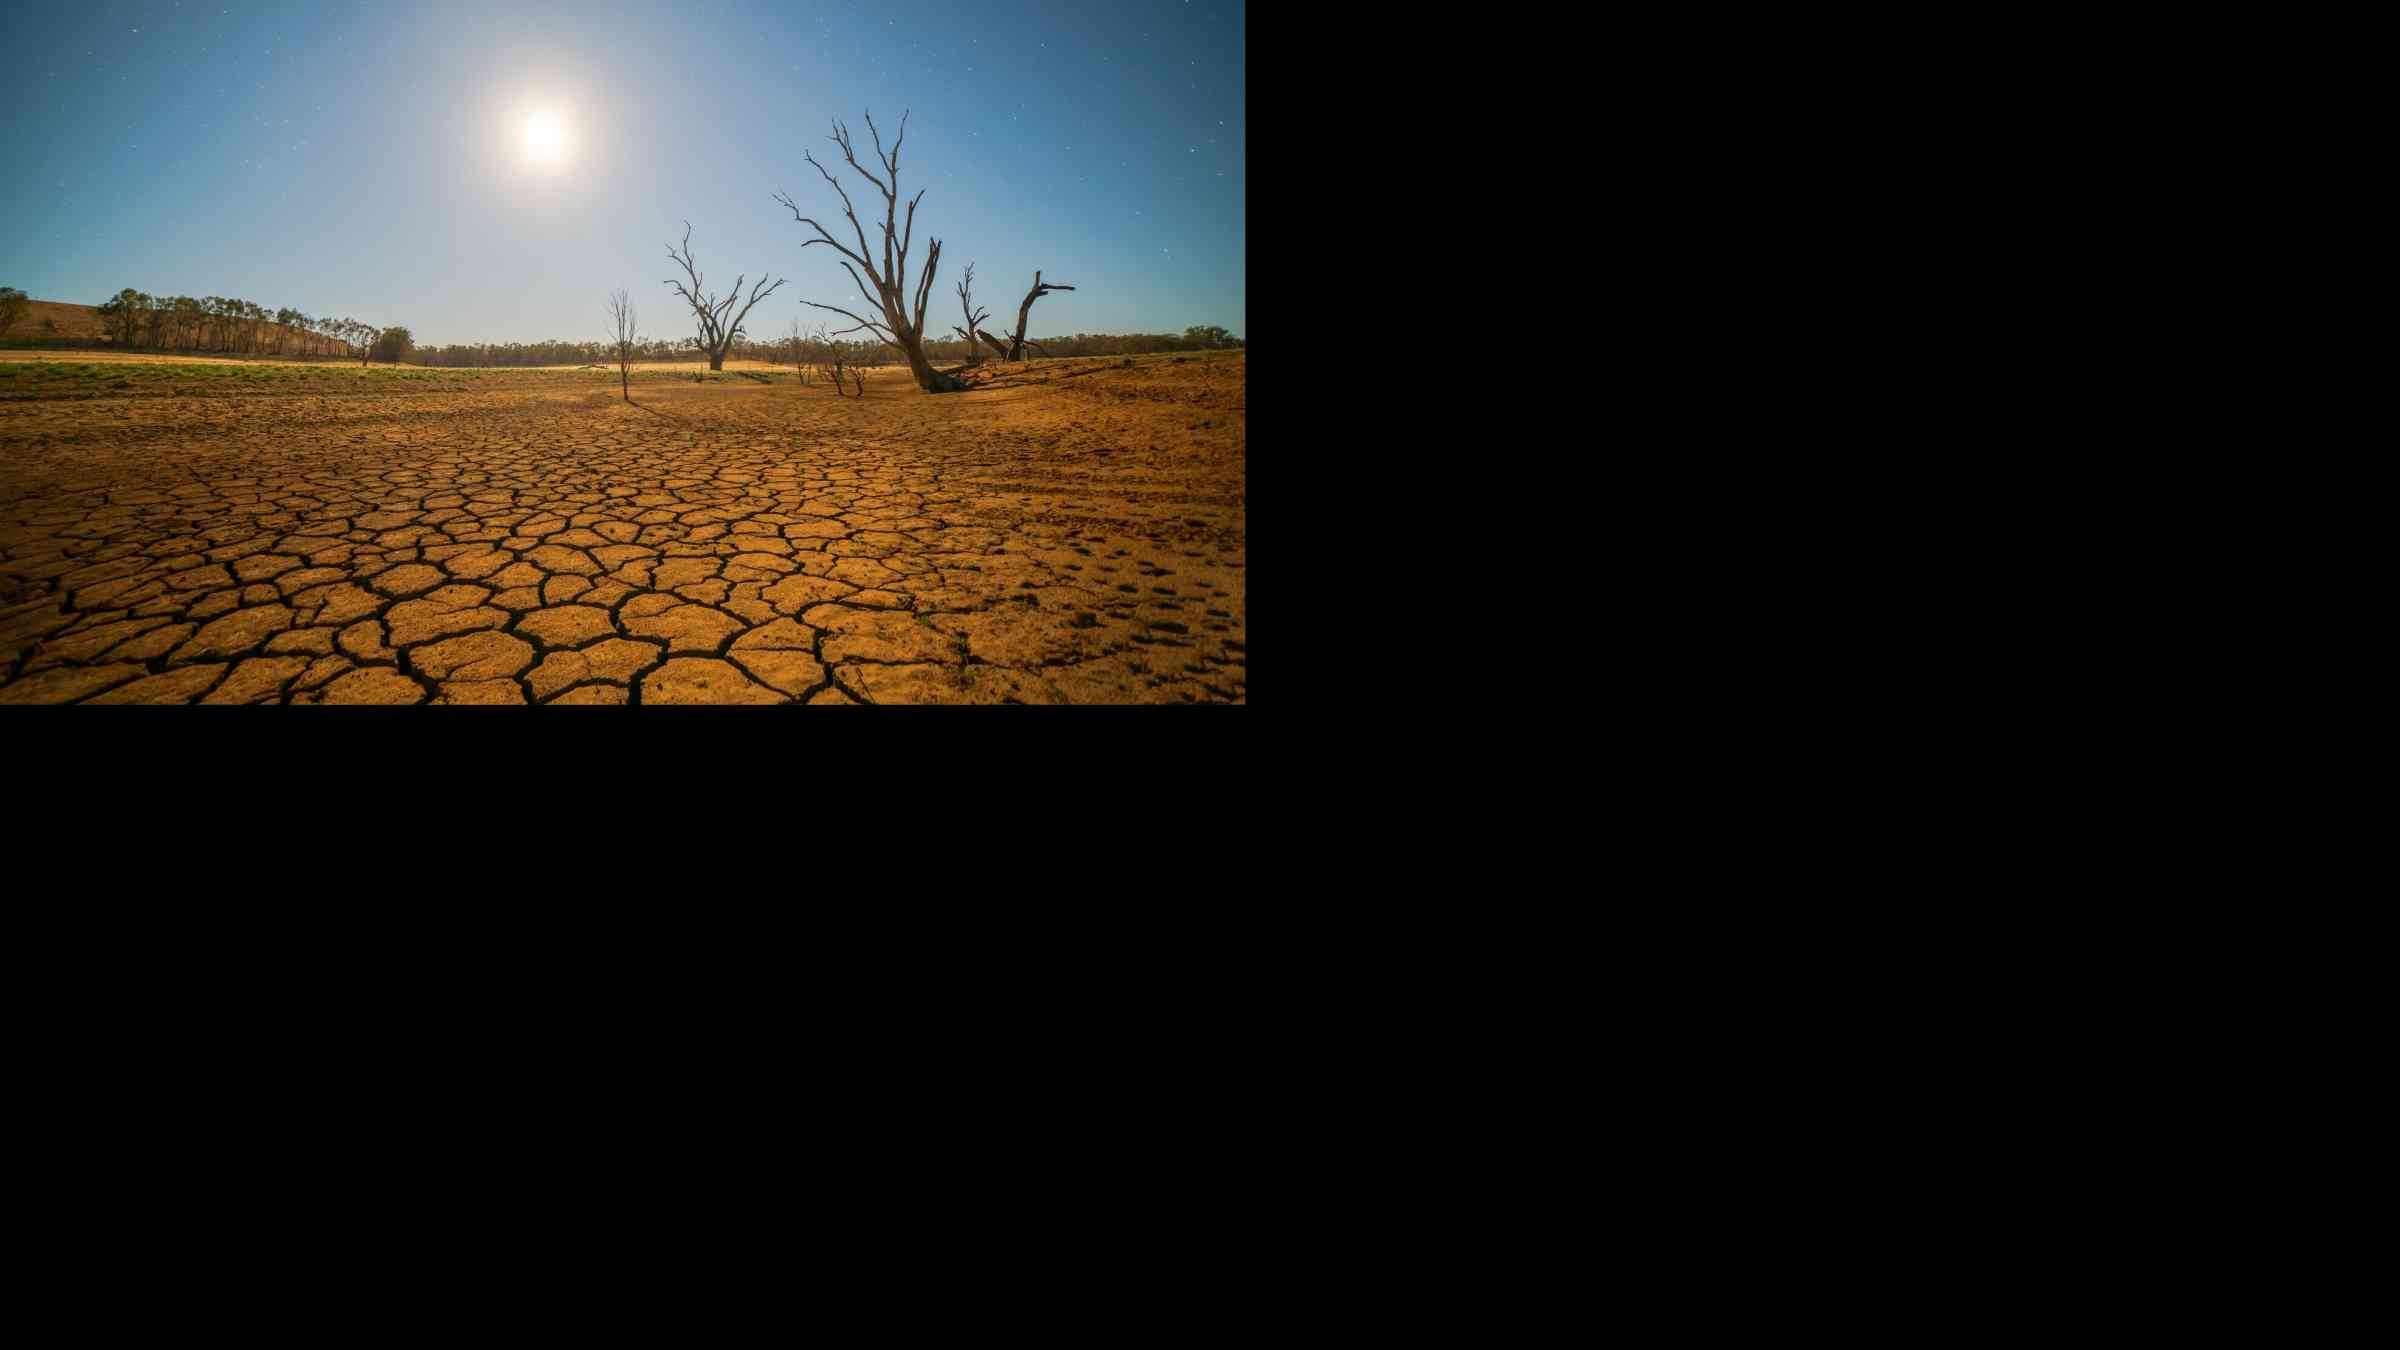 Drought cracked desert landscape